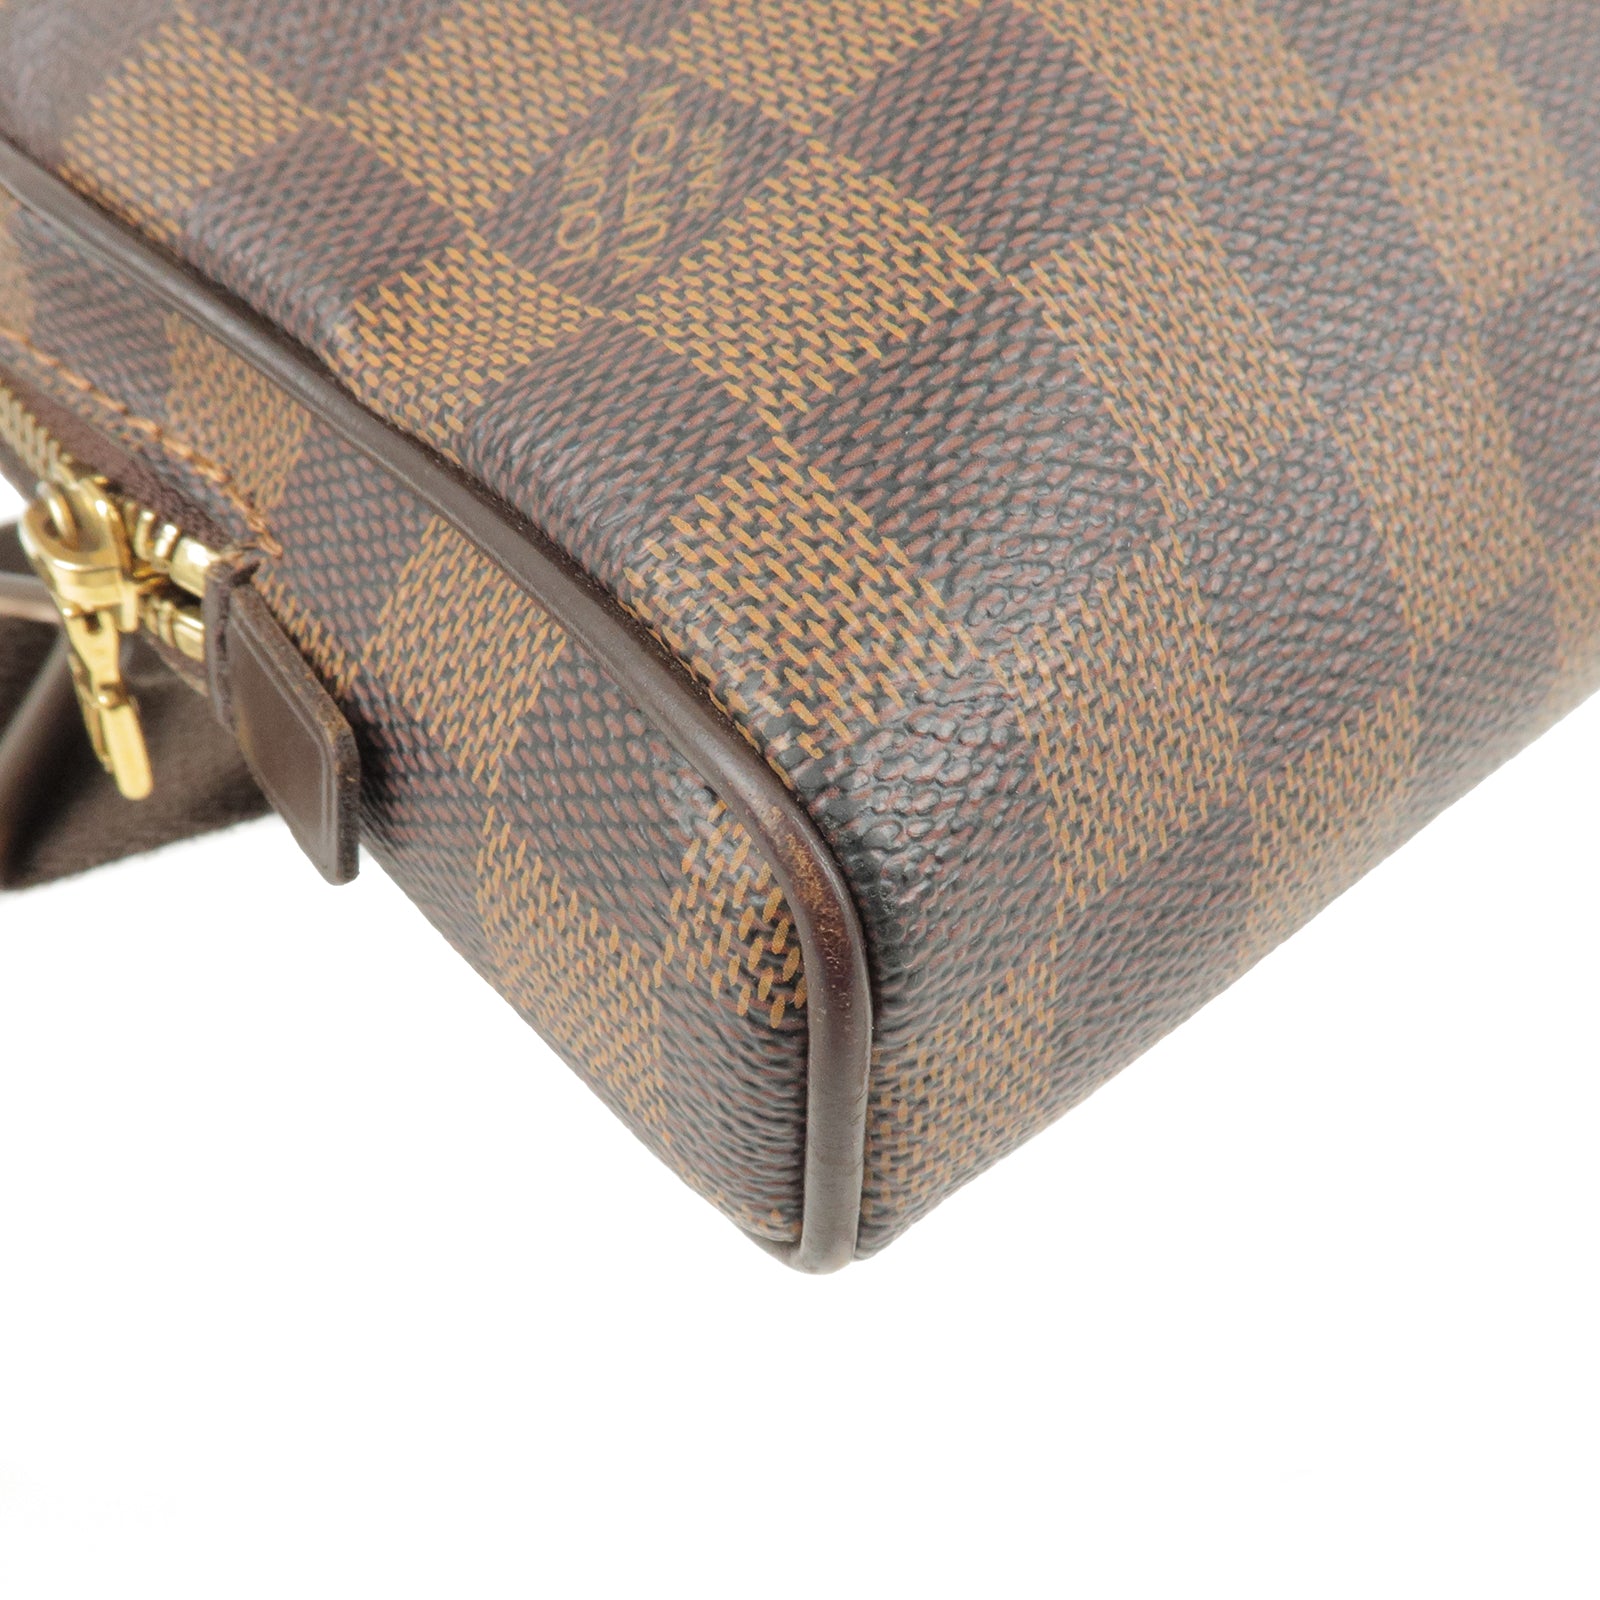 Handbag LOUIS VUITTON Keepall 50 Vintage authentic  Sac de voyage louis  vuitton, Sac de voyage, Louis vuitton keepall